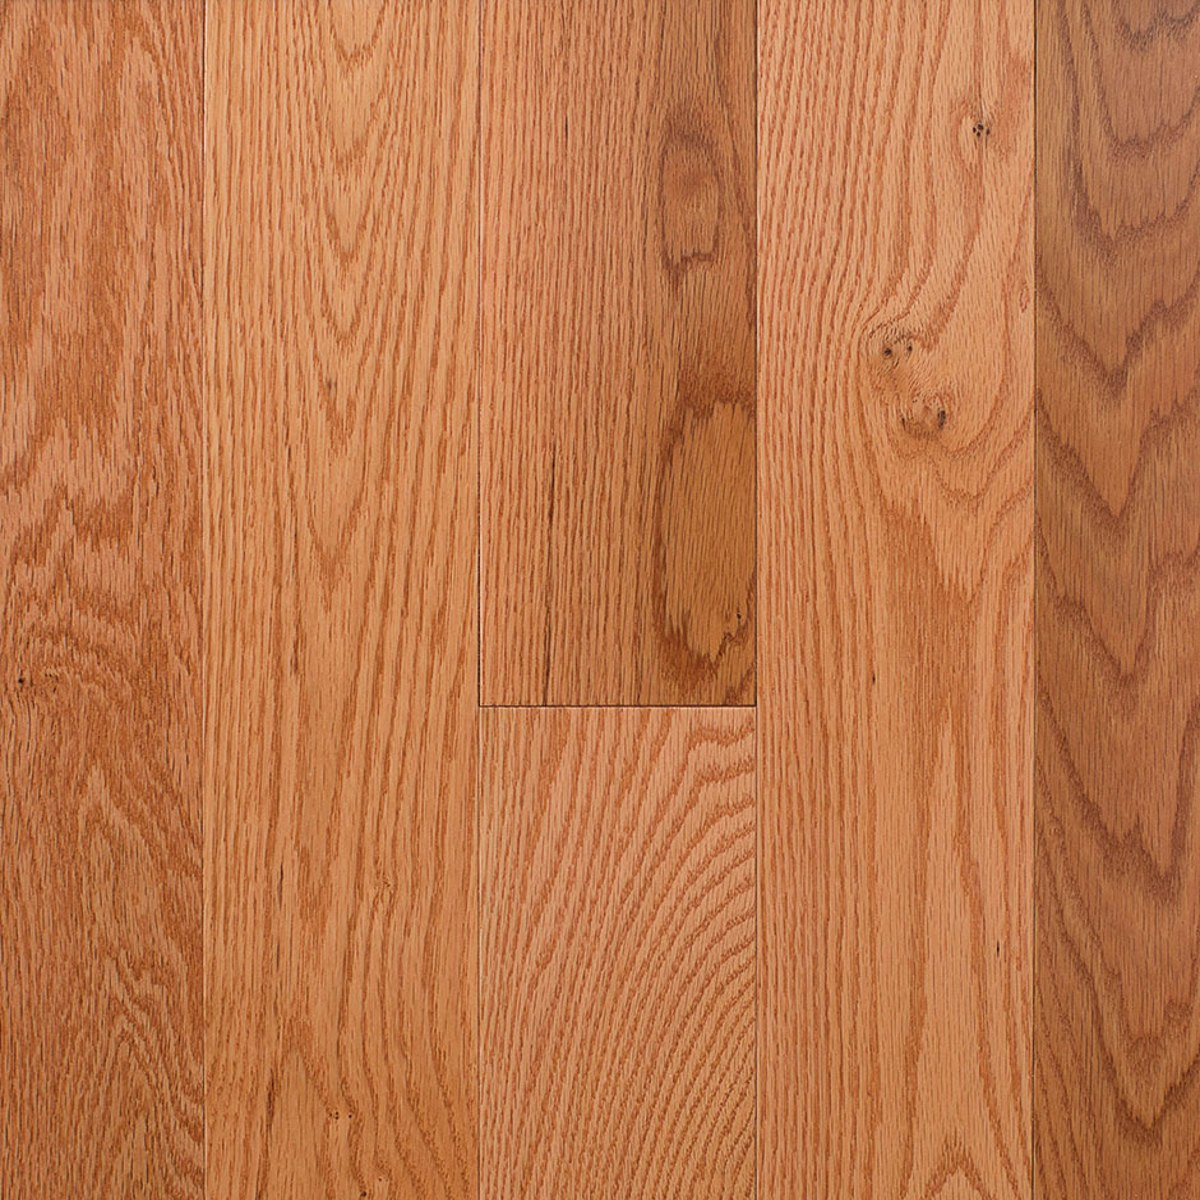 3 1 4 Natural Satin Red Oak Solid, Satin Finish Hardwood Flooring Toronto